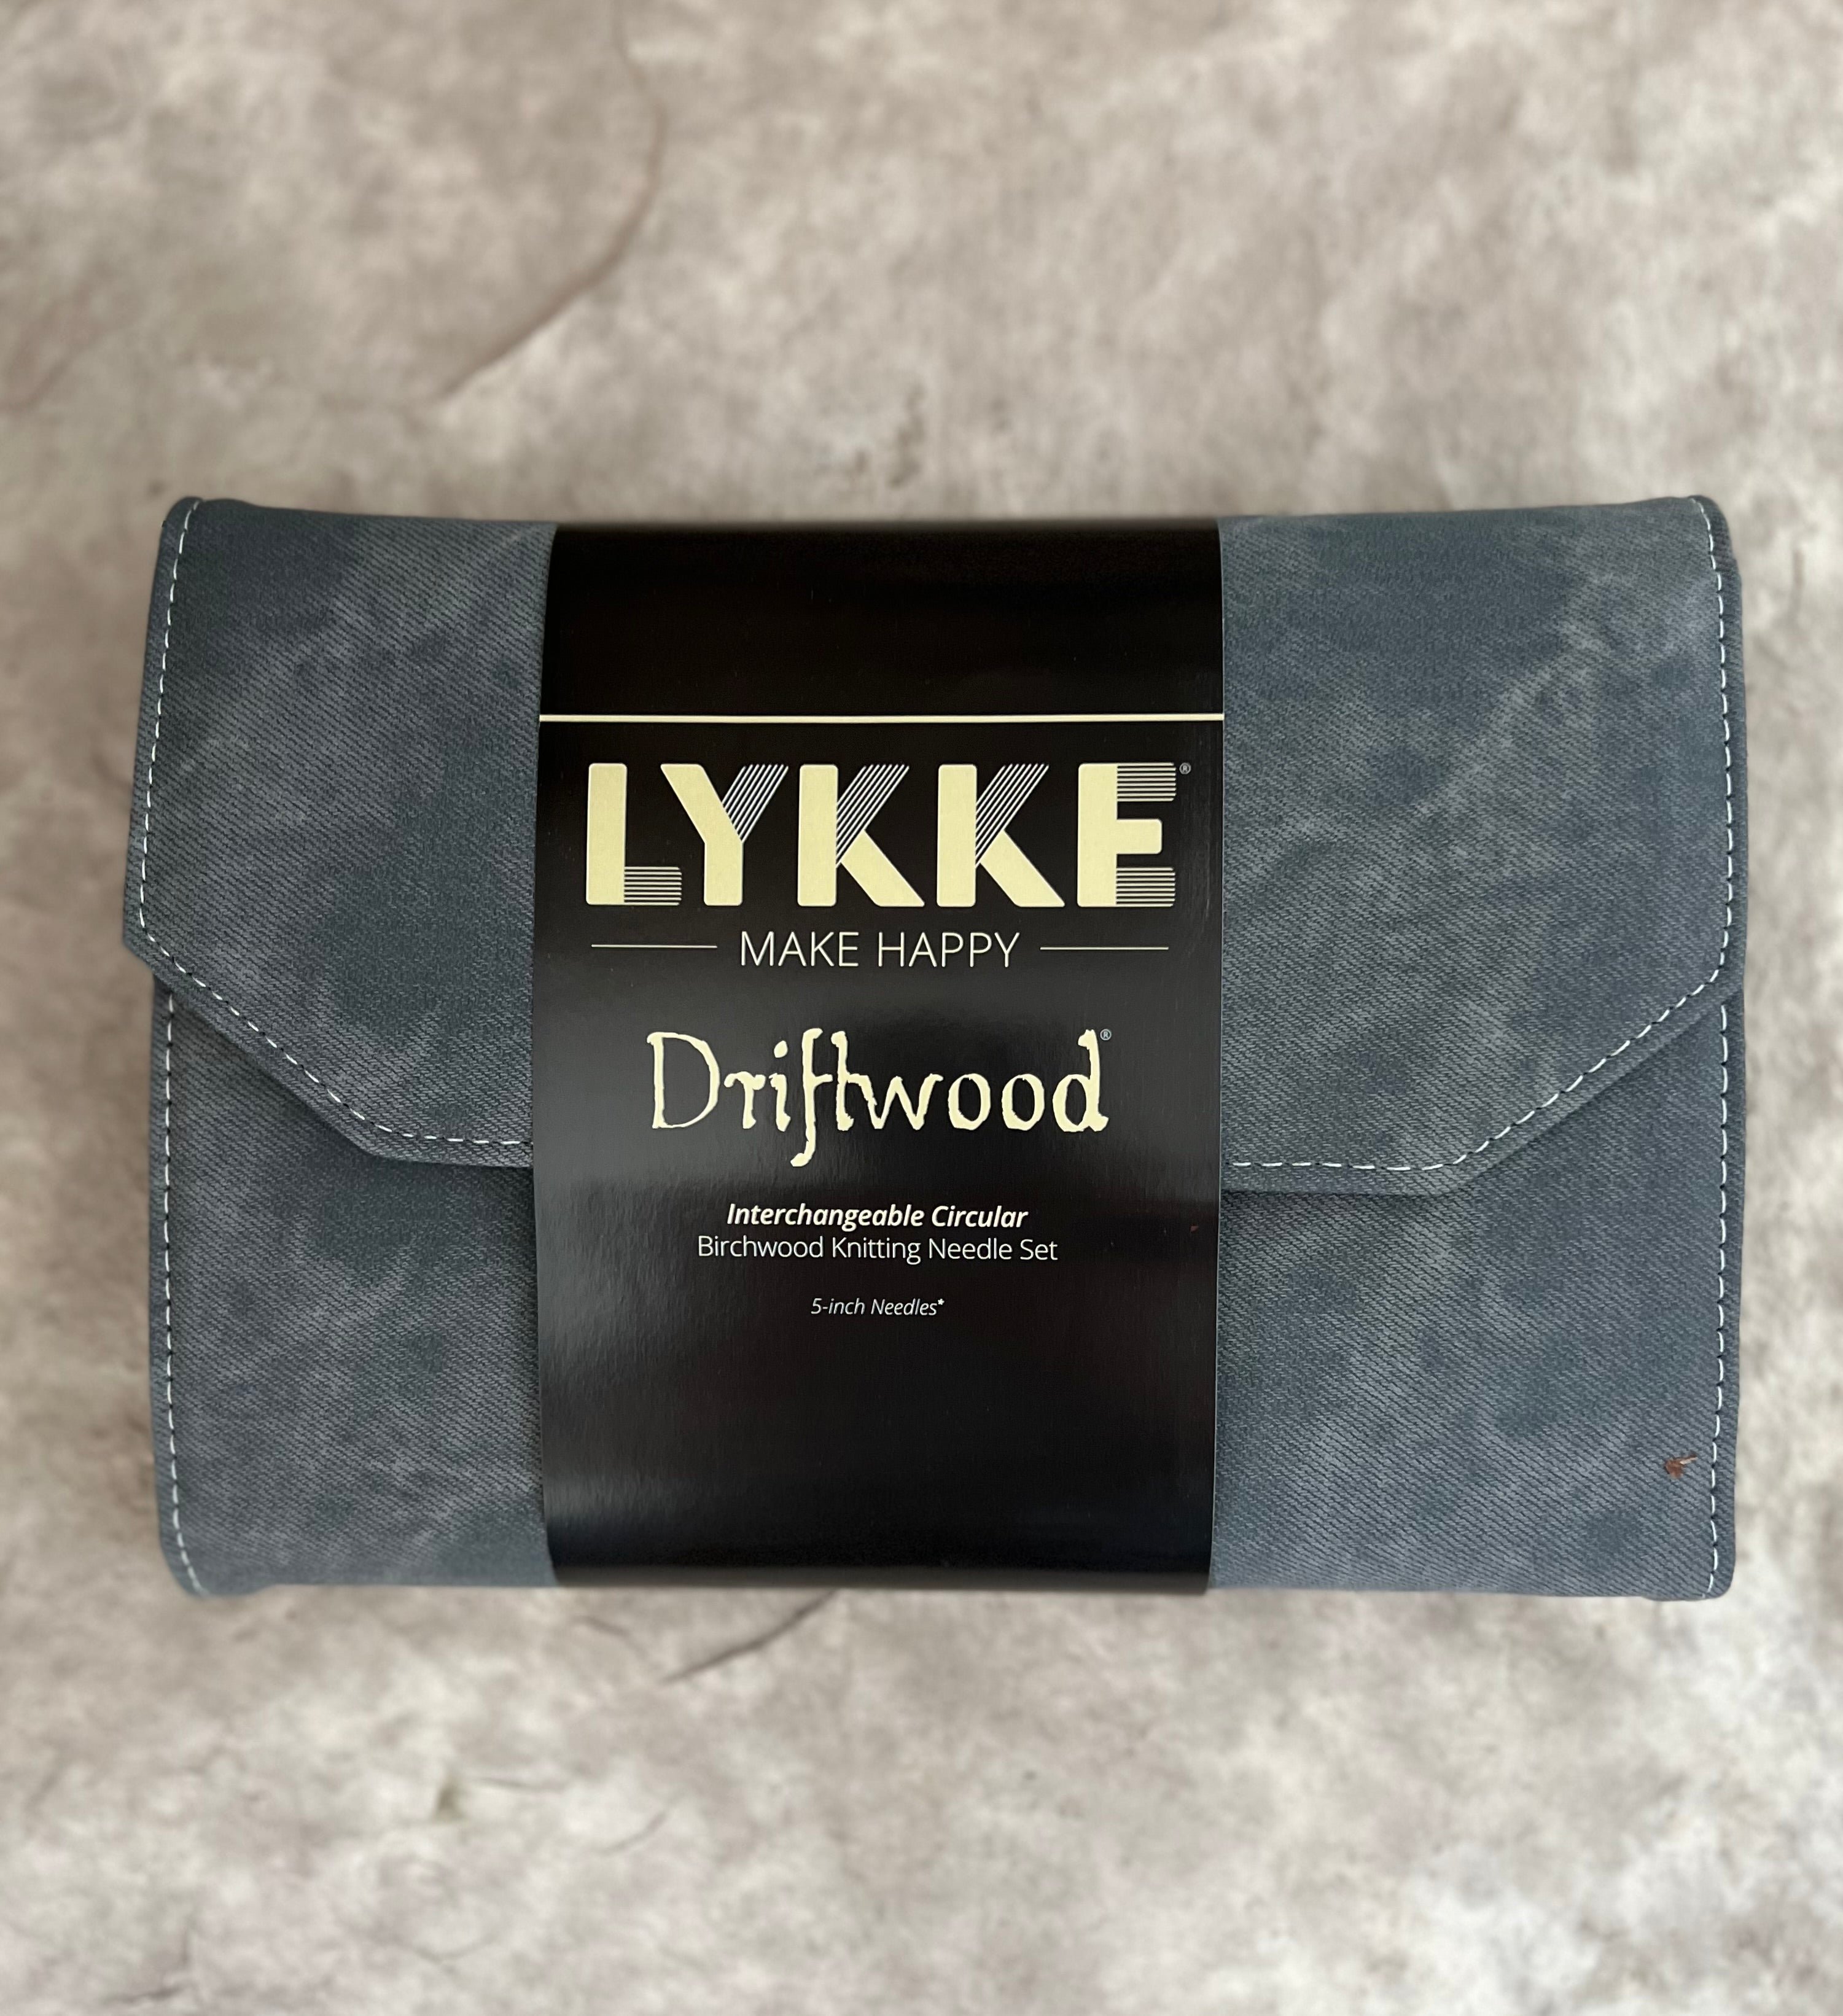 Lykke Driftwood 3.5-inch (9cm) Interchangeable Circular Knitting Needle Set Birchwood US Sizes 3, 4, 5, 6, 7, 8, 9, 10, & 10.5 Includes Grey Denim